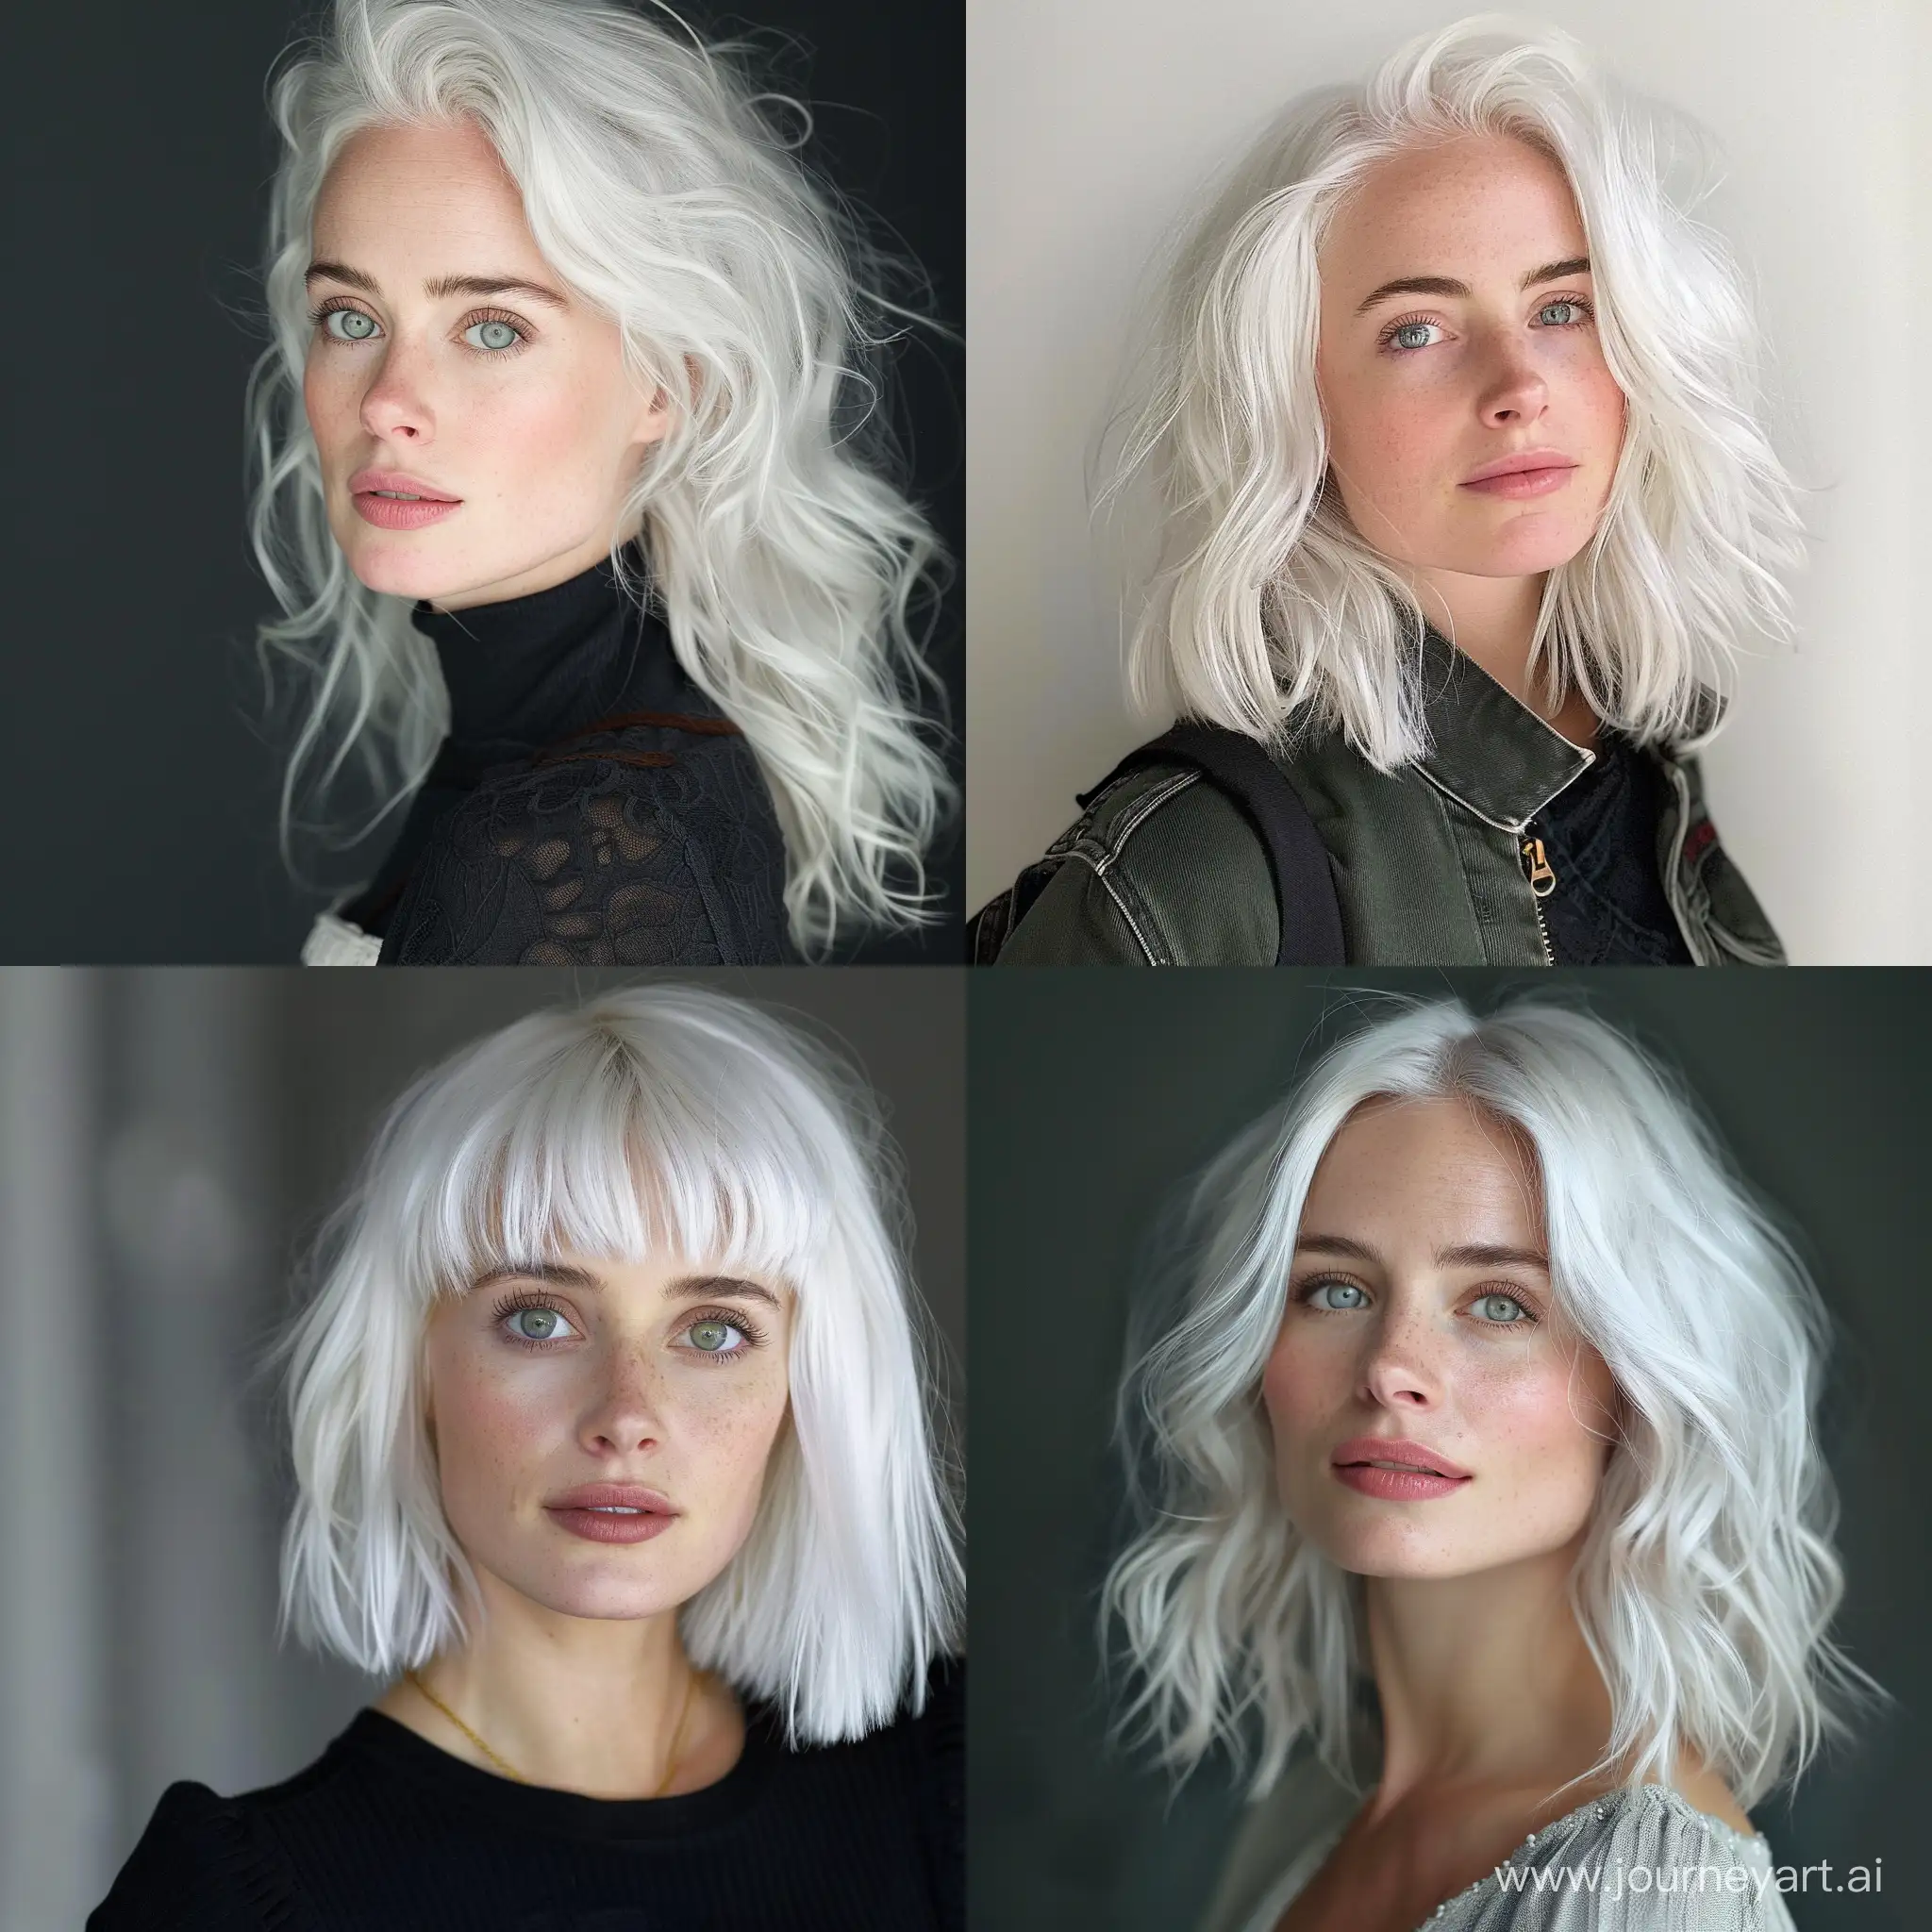 Alexis-Bledel-Elegant-Portrait-with-White-Hair